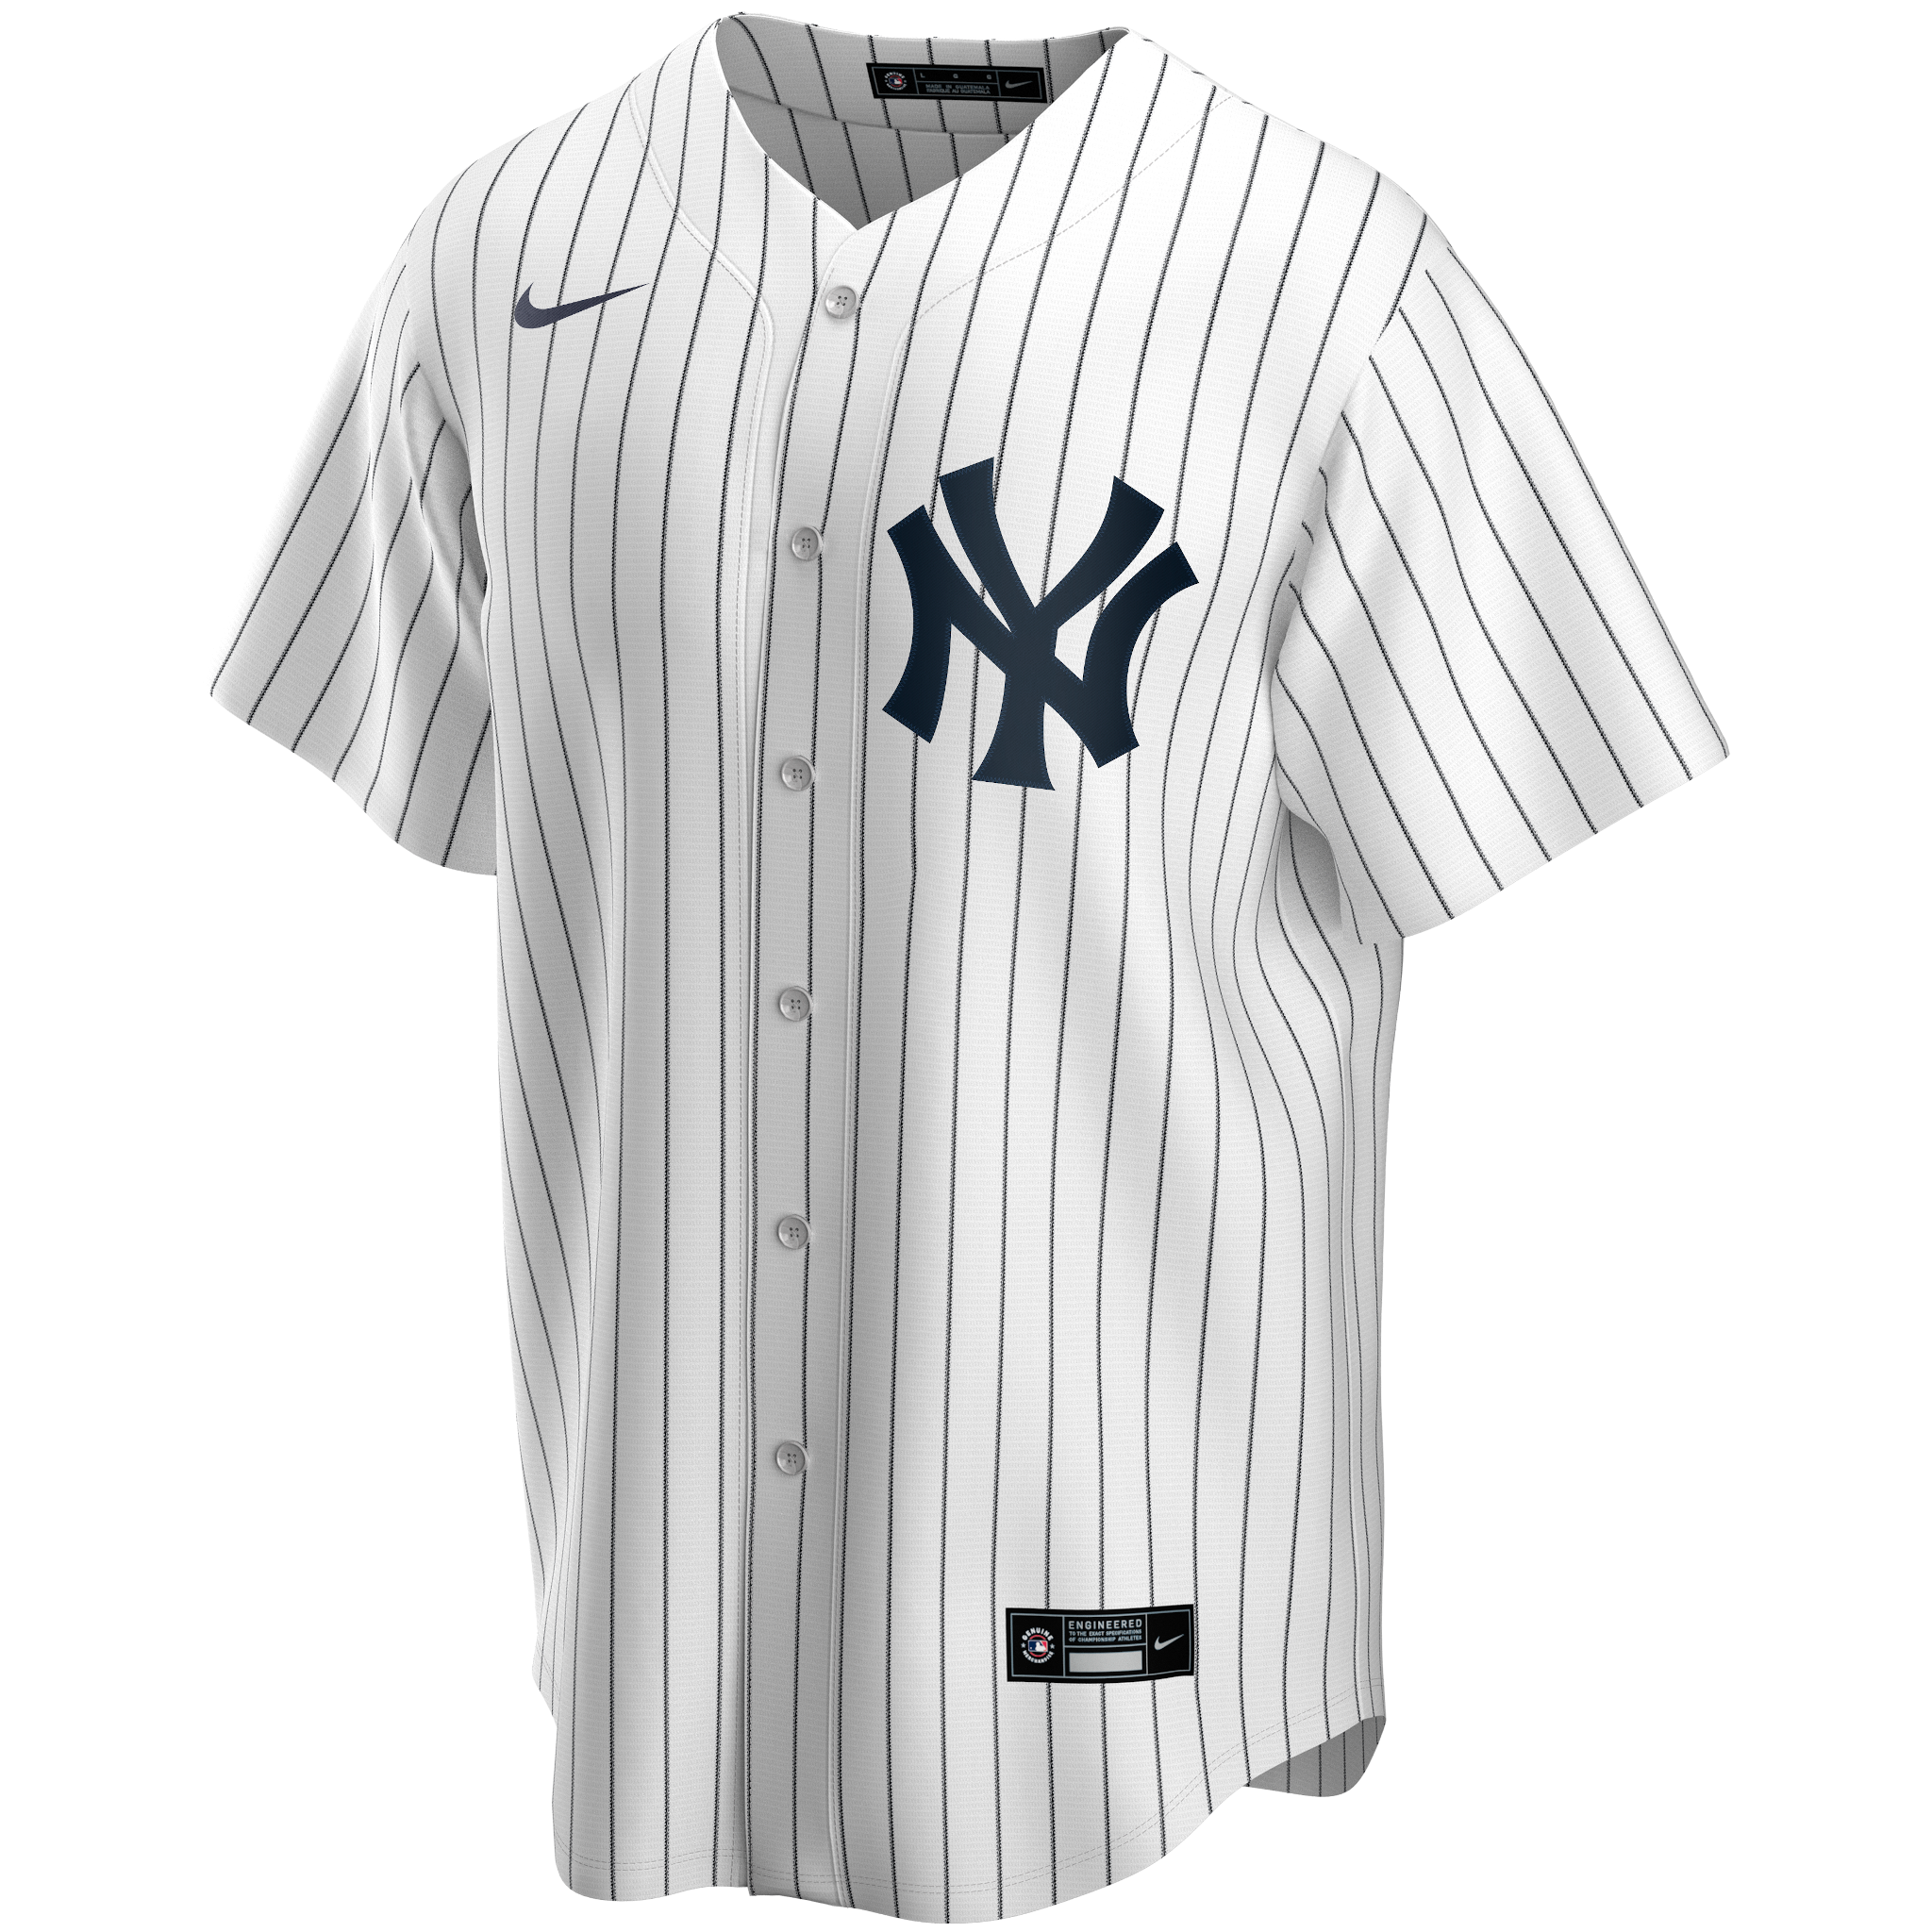 Men's Nike Yogi Berra New York Yankees Cooperstown Collection Navy Pinstripe  Jersey